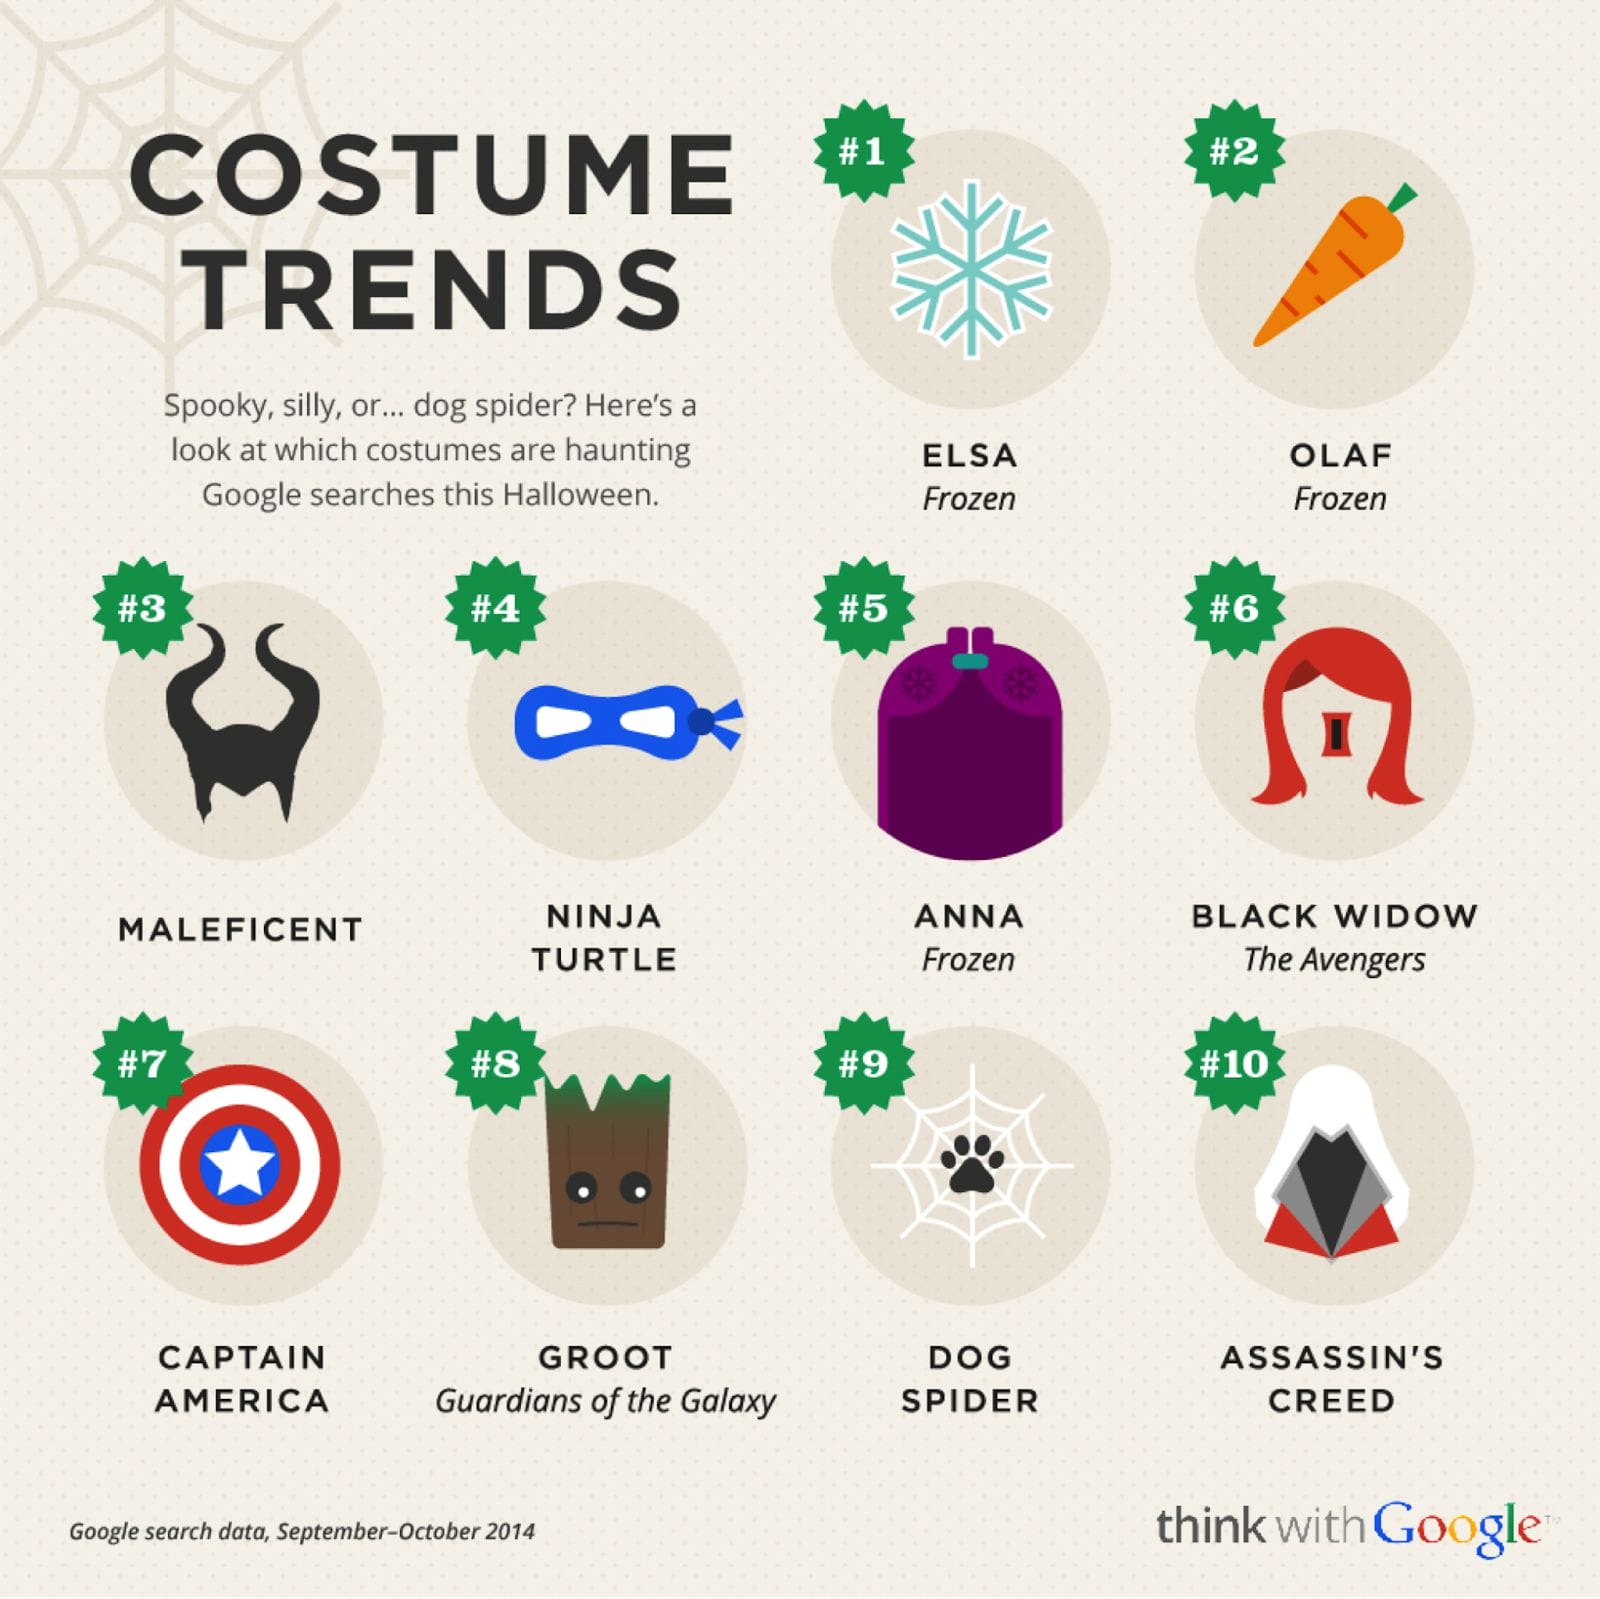 Halloween Blog Post Costume Trends Infographic